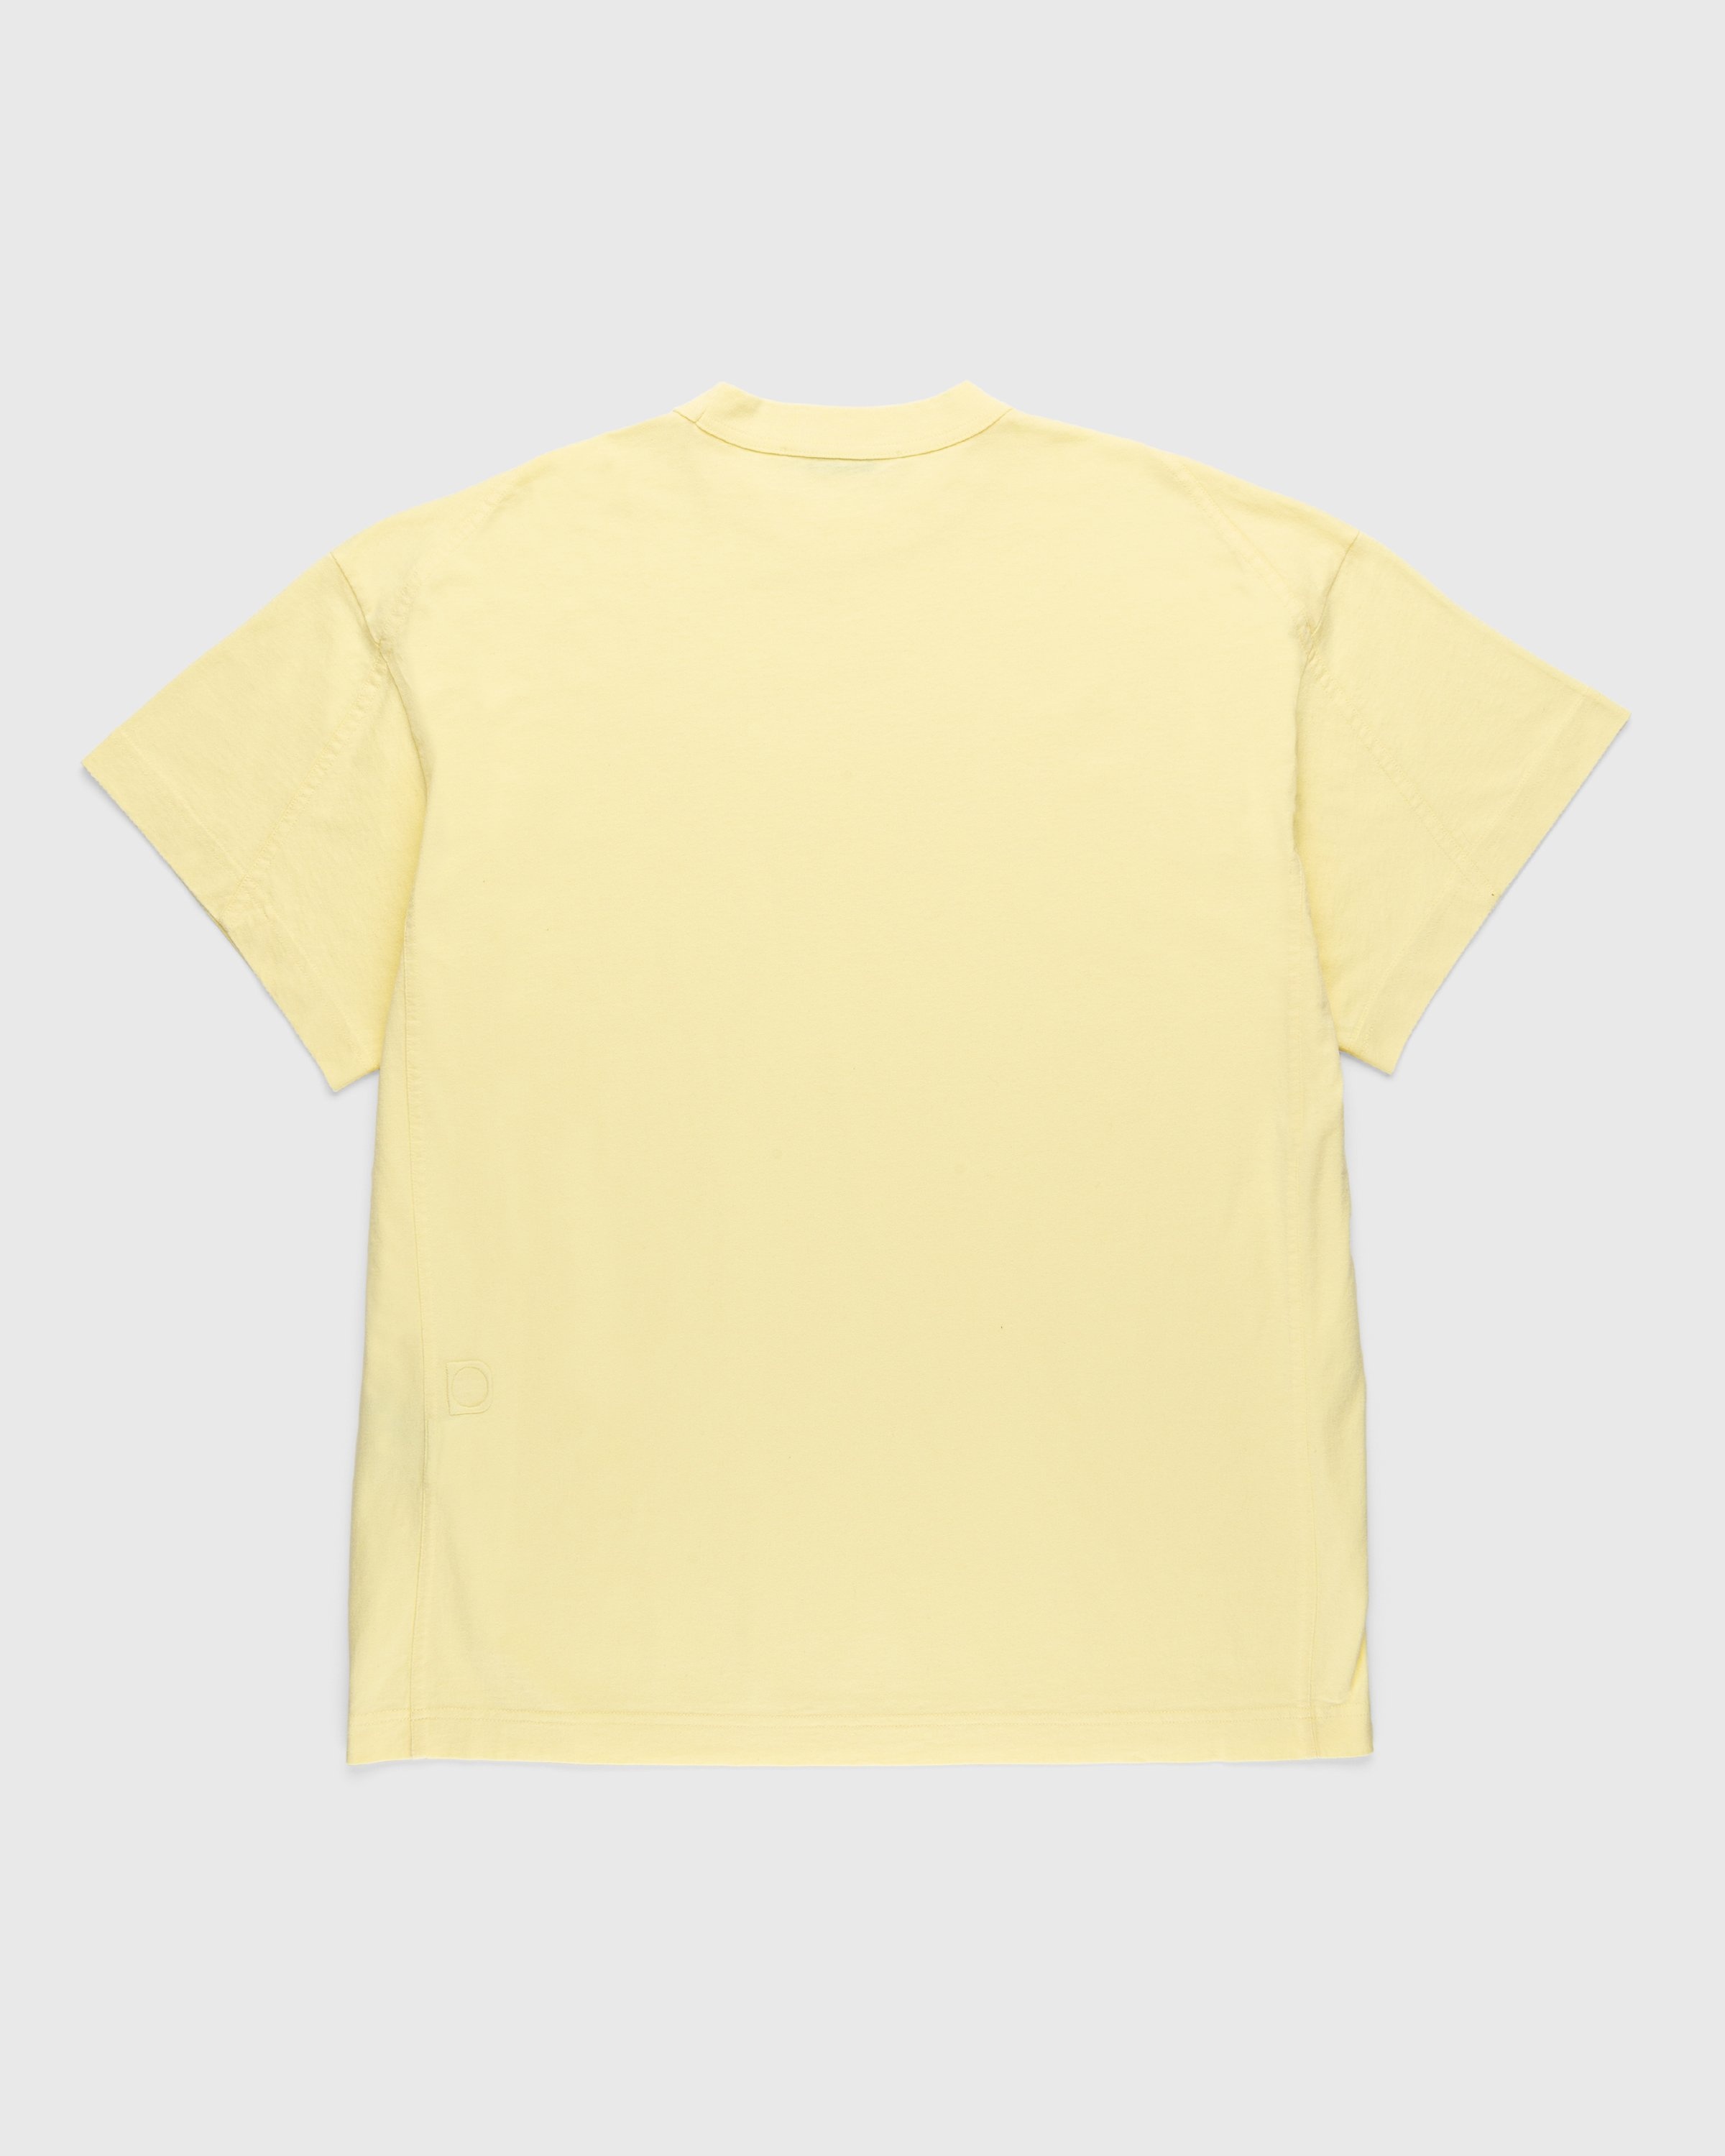 Diomene by Damir Doma – Cotton Crewneck T-Shirt Lemonade - T-shirts - Yellow - Image 2